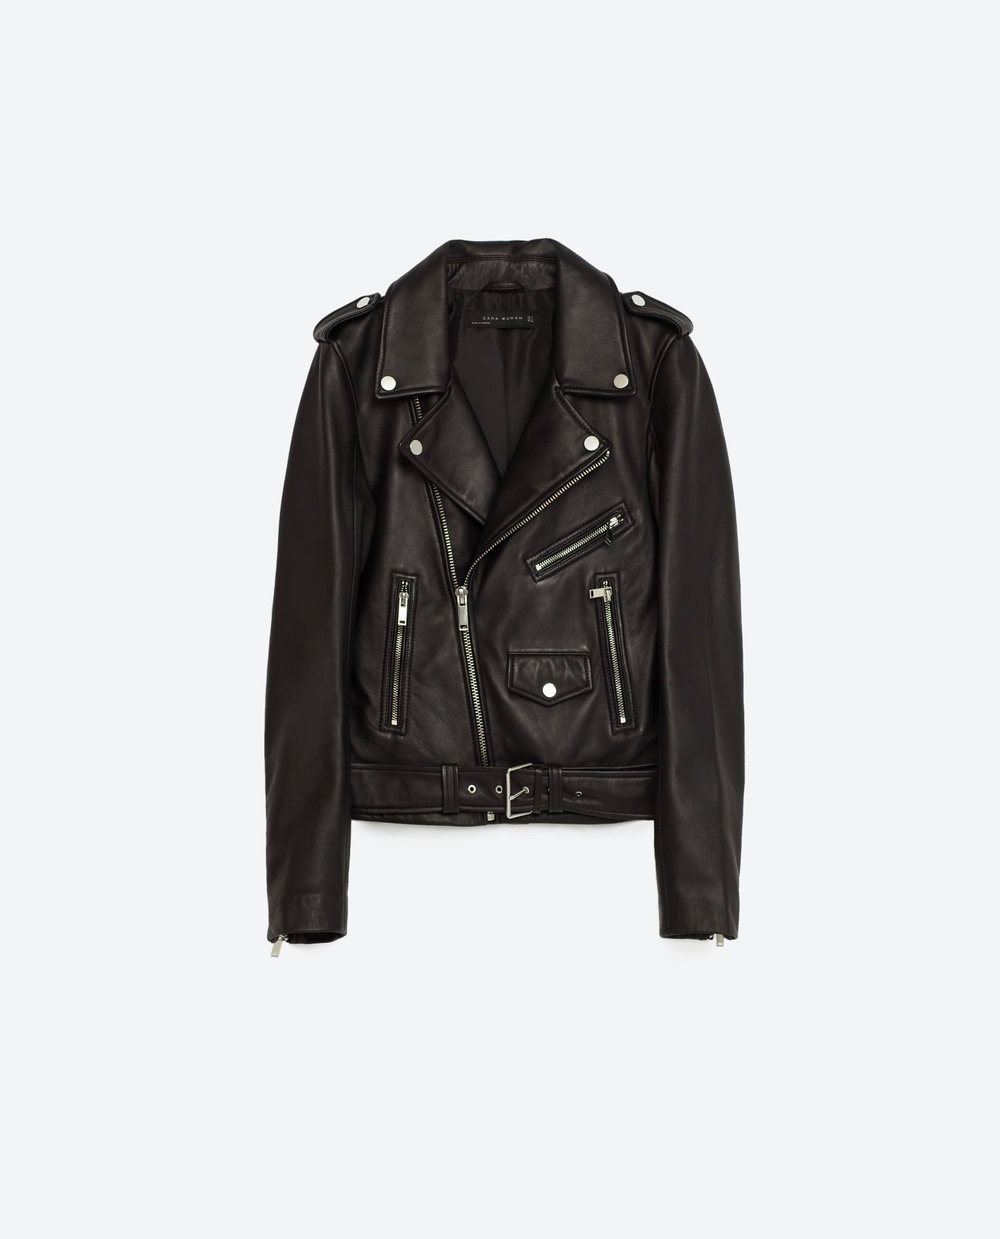 Zara: leather jacket, £119